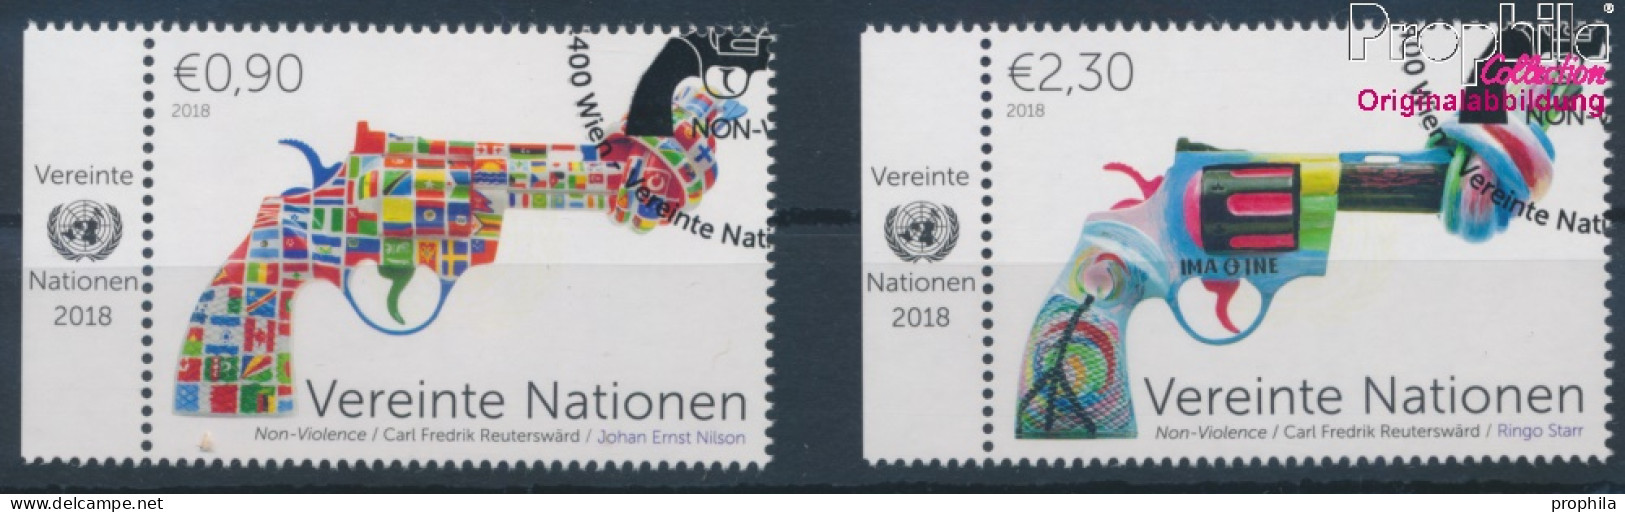 UNO - Wien 1041-1042 (kompl.Ausg.) Gestempelt 2018 Non Violence Project (10216425 - Gebraucht